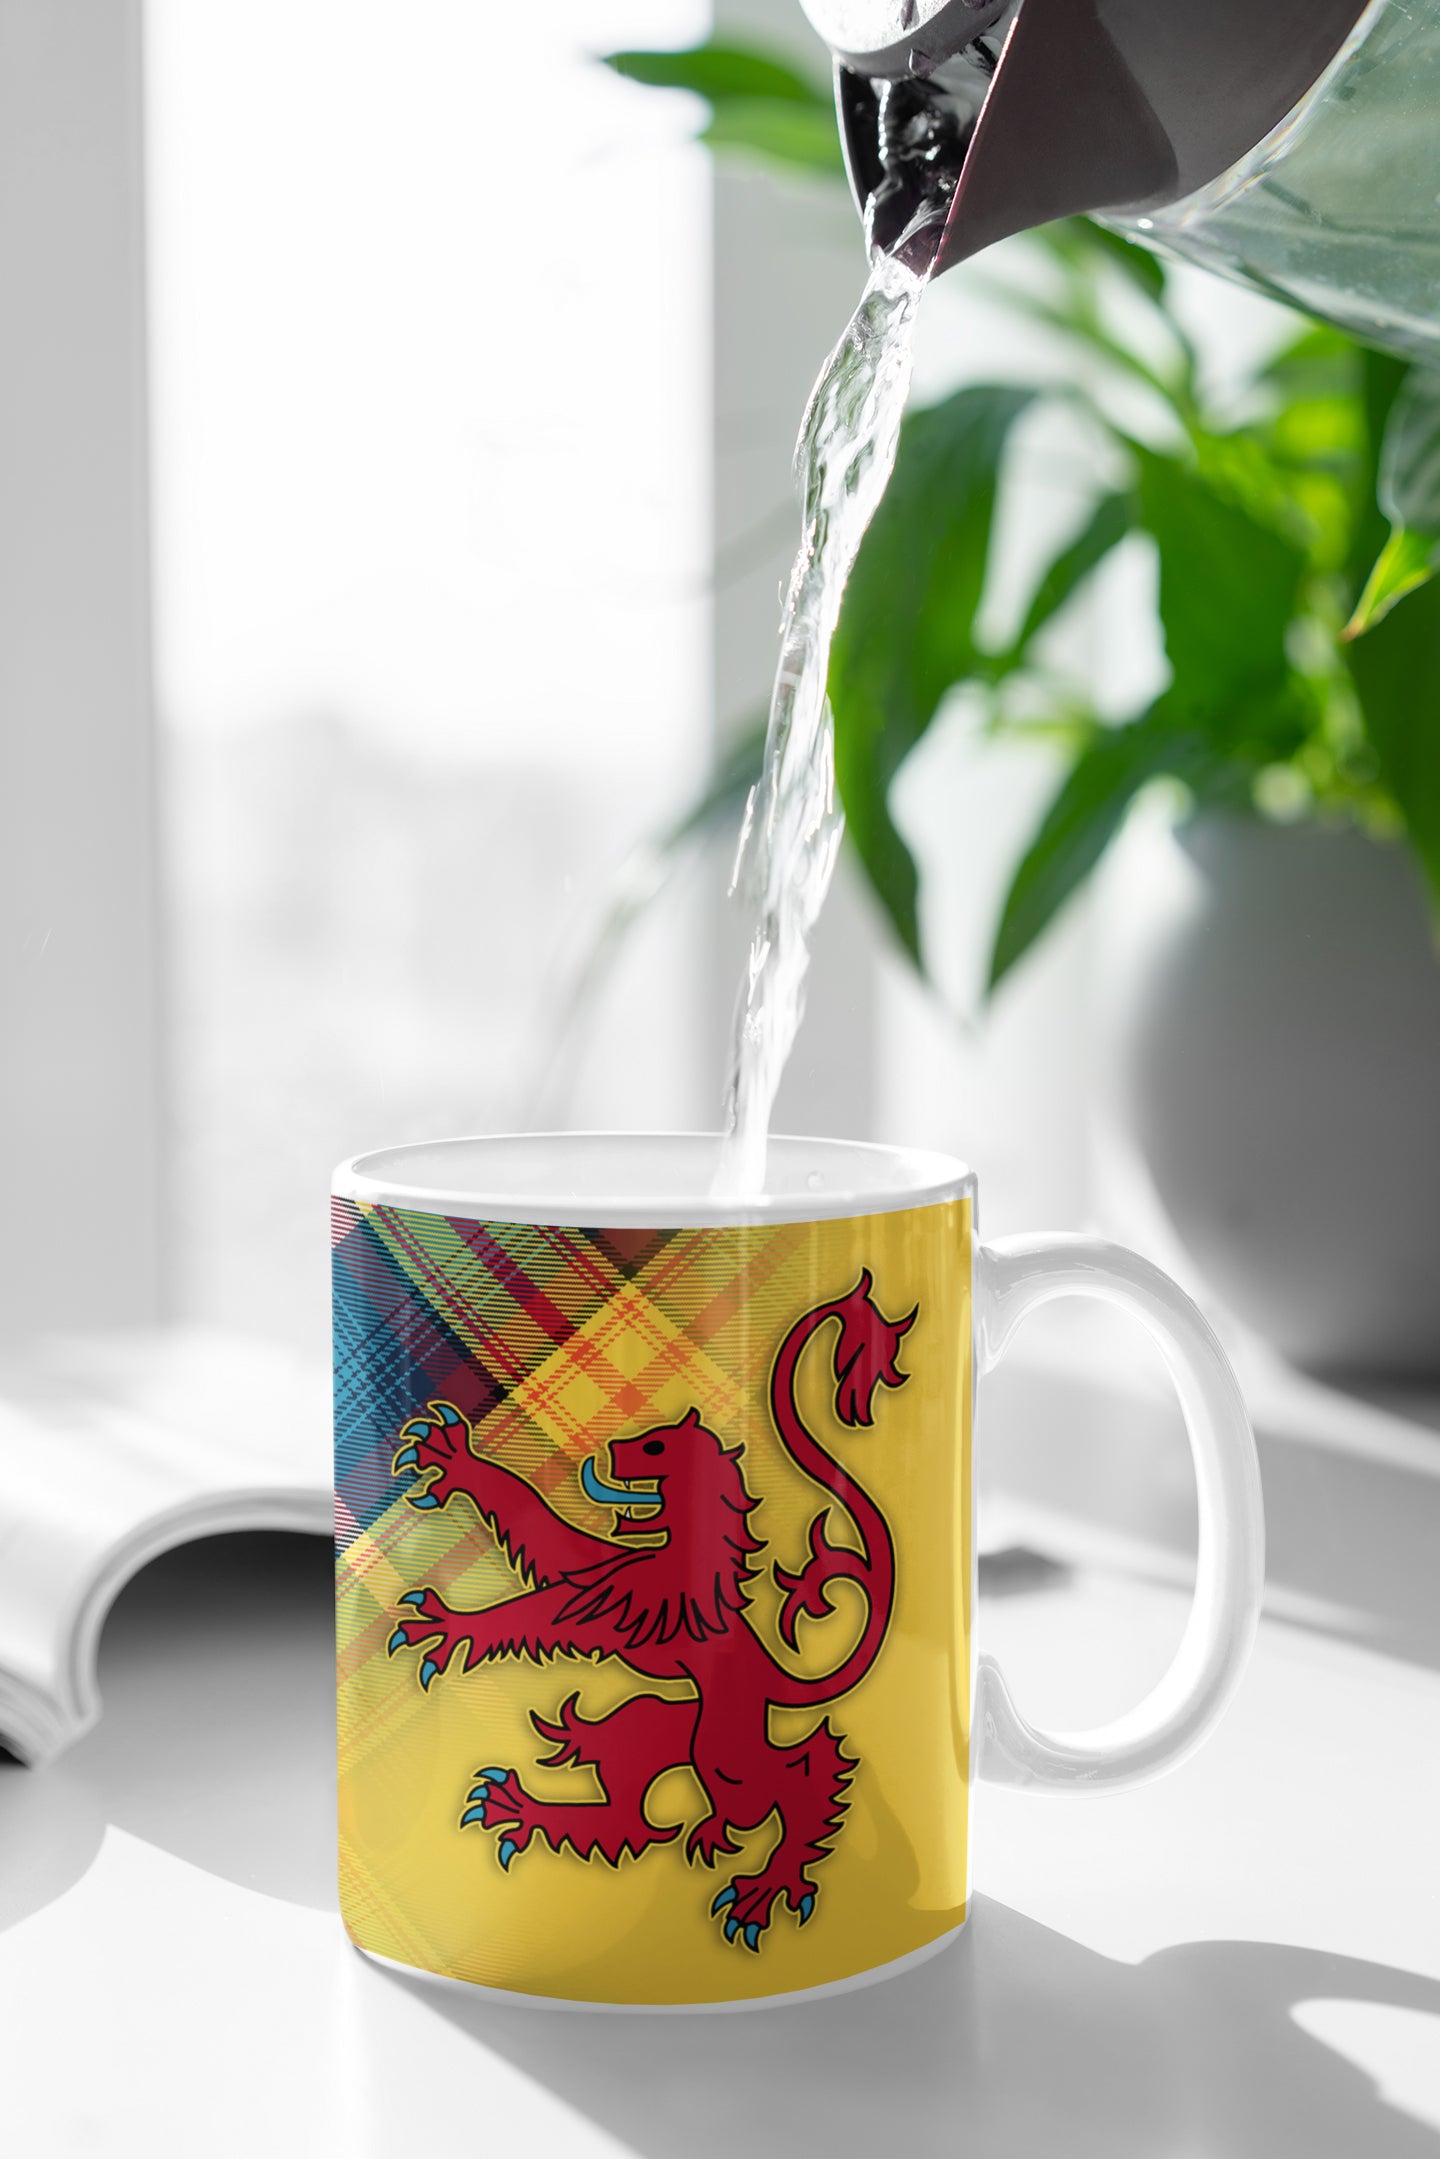 Declaration of Scottish Independence Arbroath 6th April 1320 Lion Rampant Steven Patrick Sim Tartan mug hot water